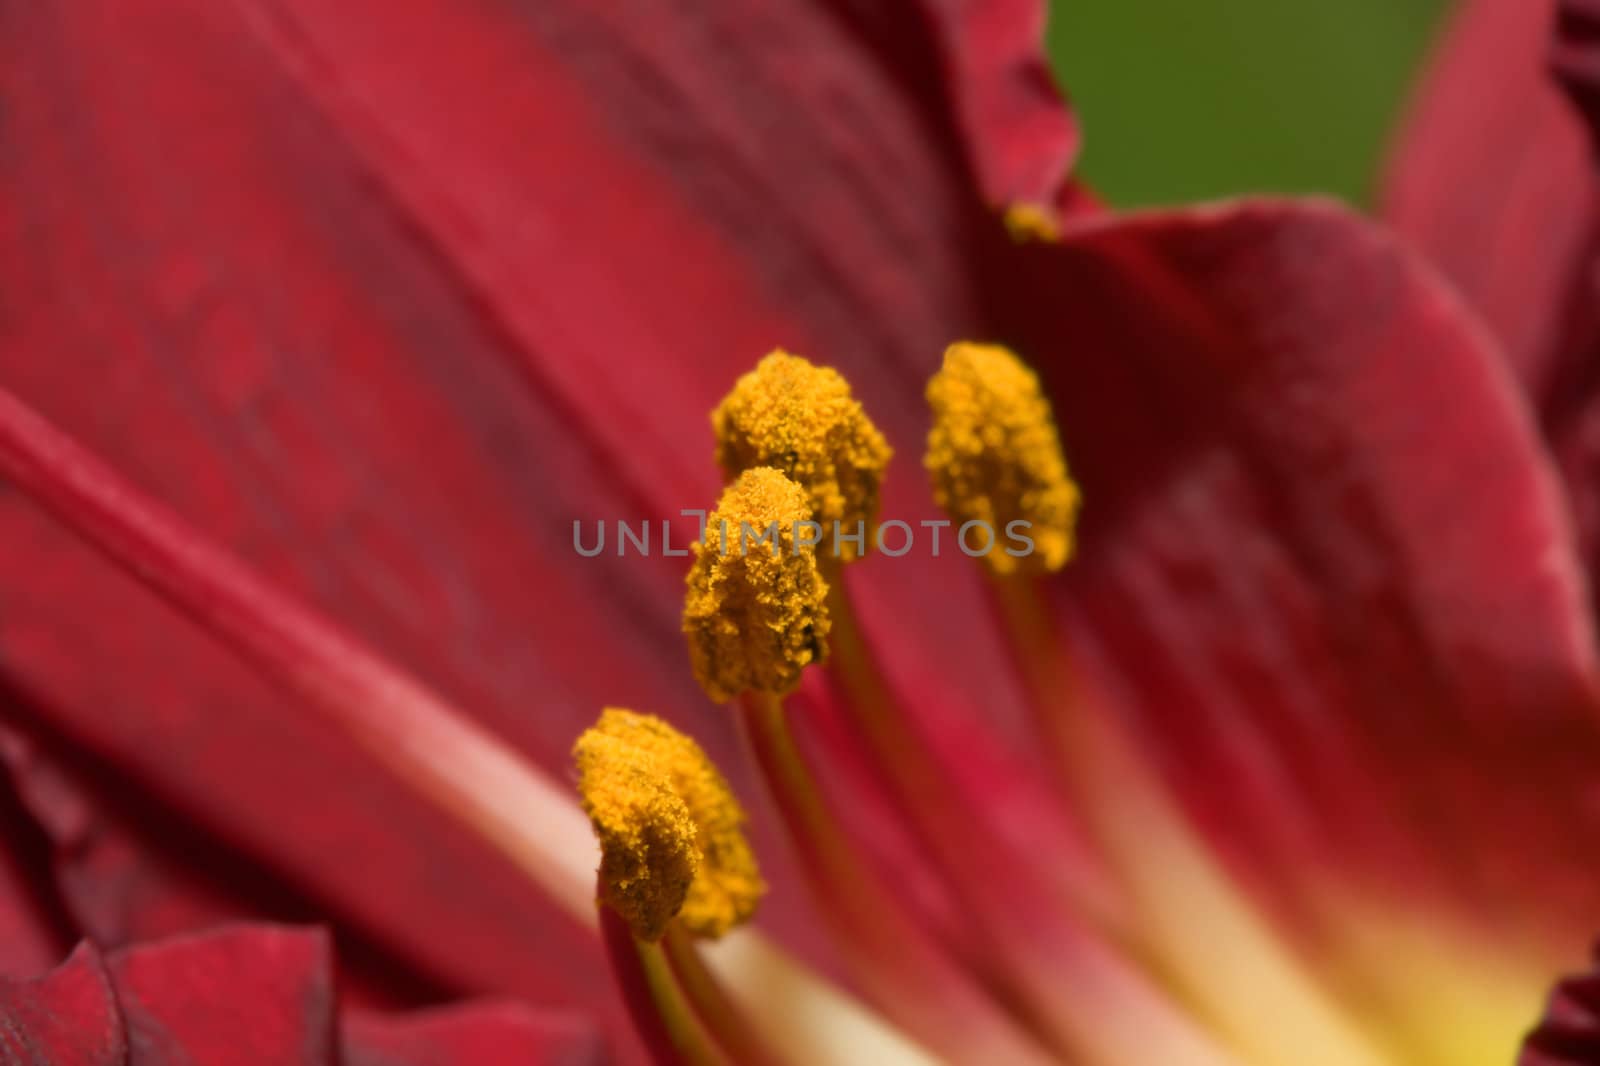 Day Lily (Hemerocallis) by Coffee999